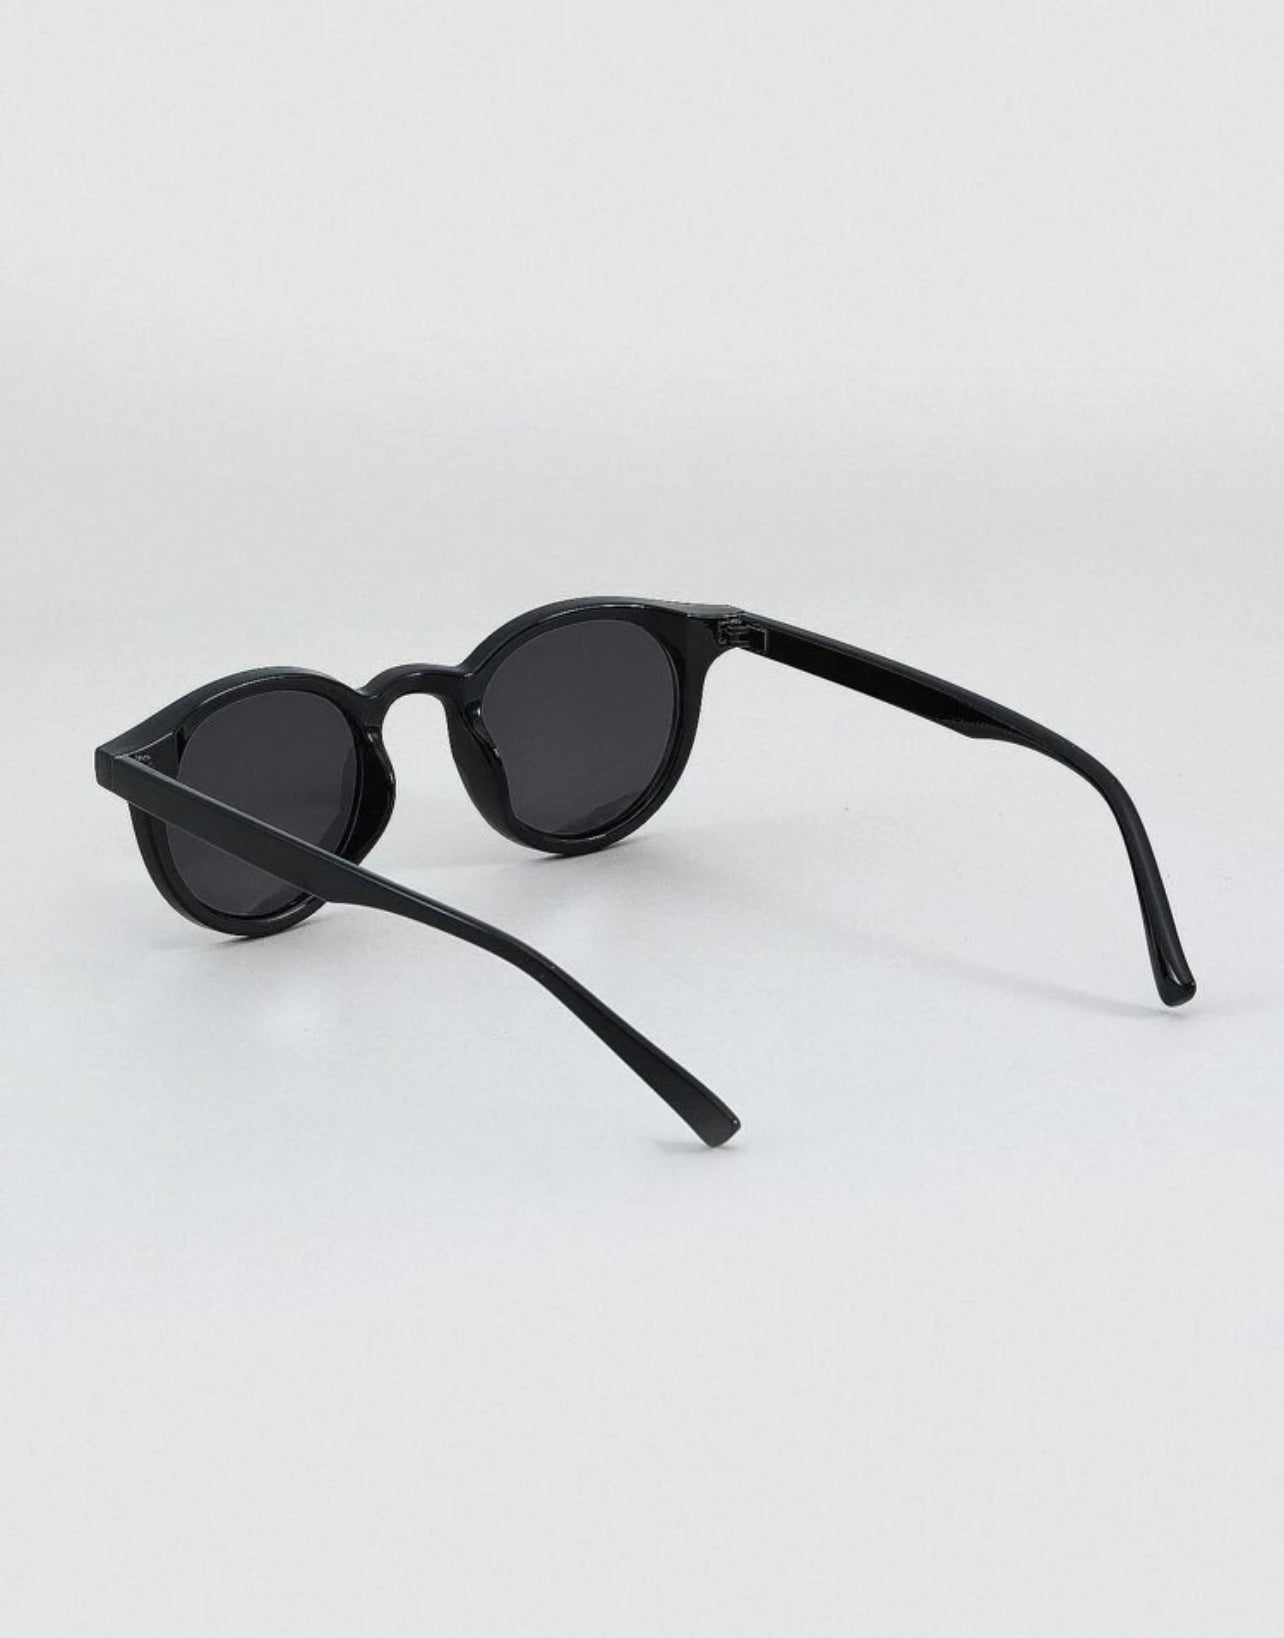 Round Vintage Sun glasses in black